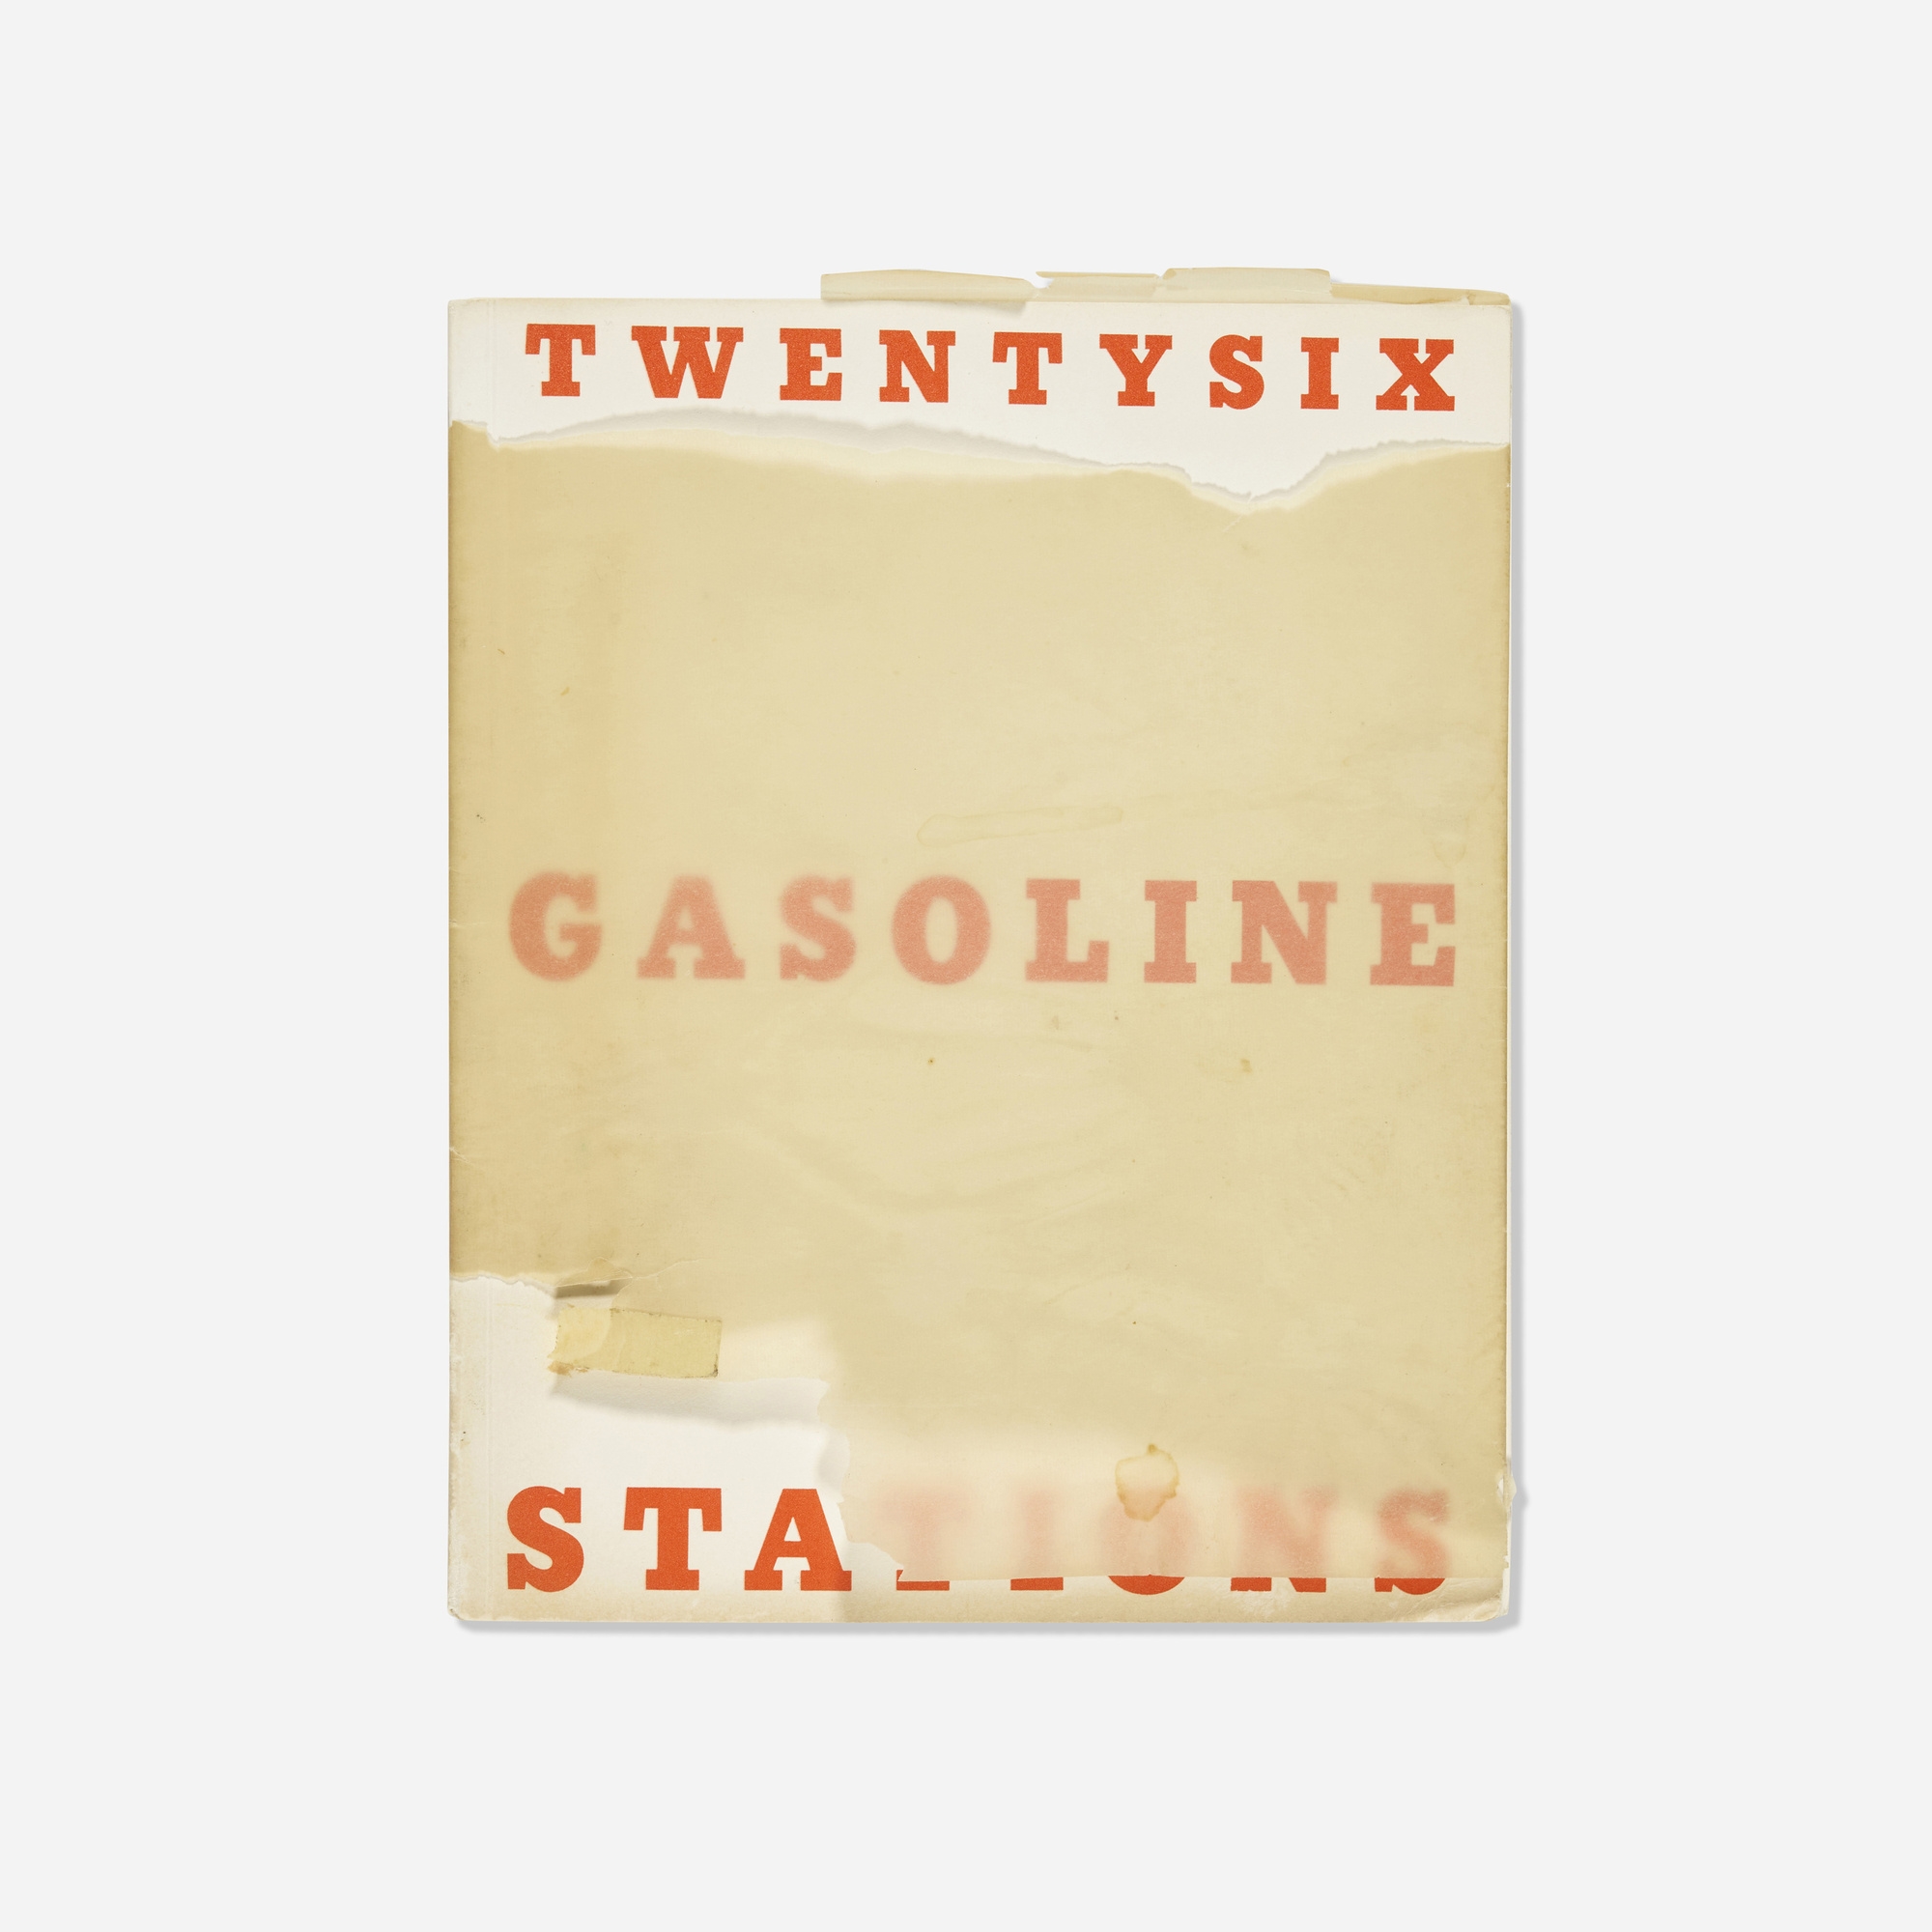 Twentysix Gasoline Stations by Ed Ruscha, 1963